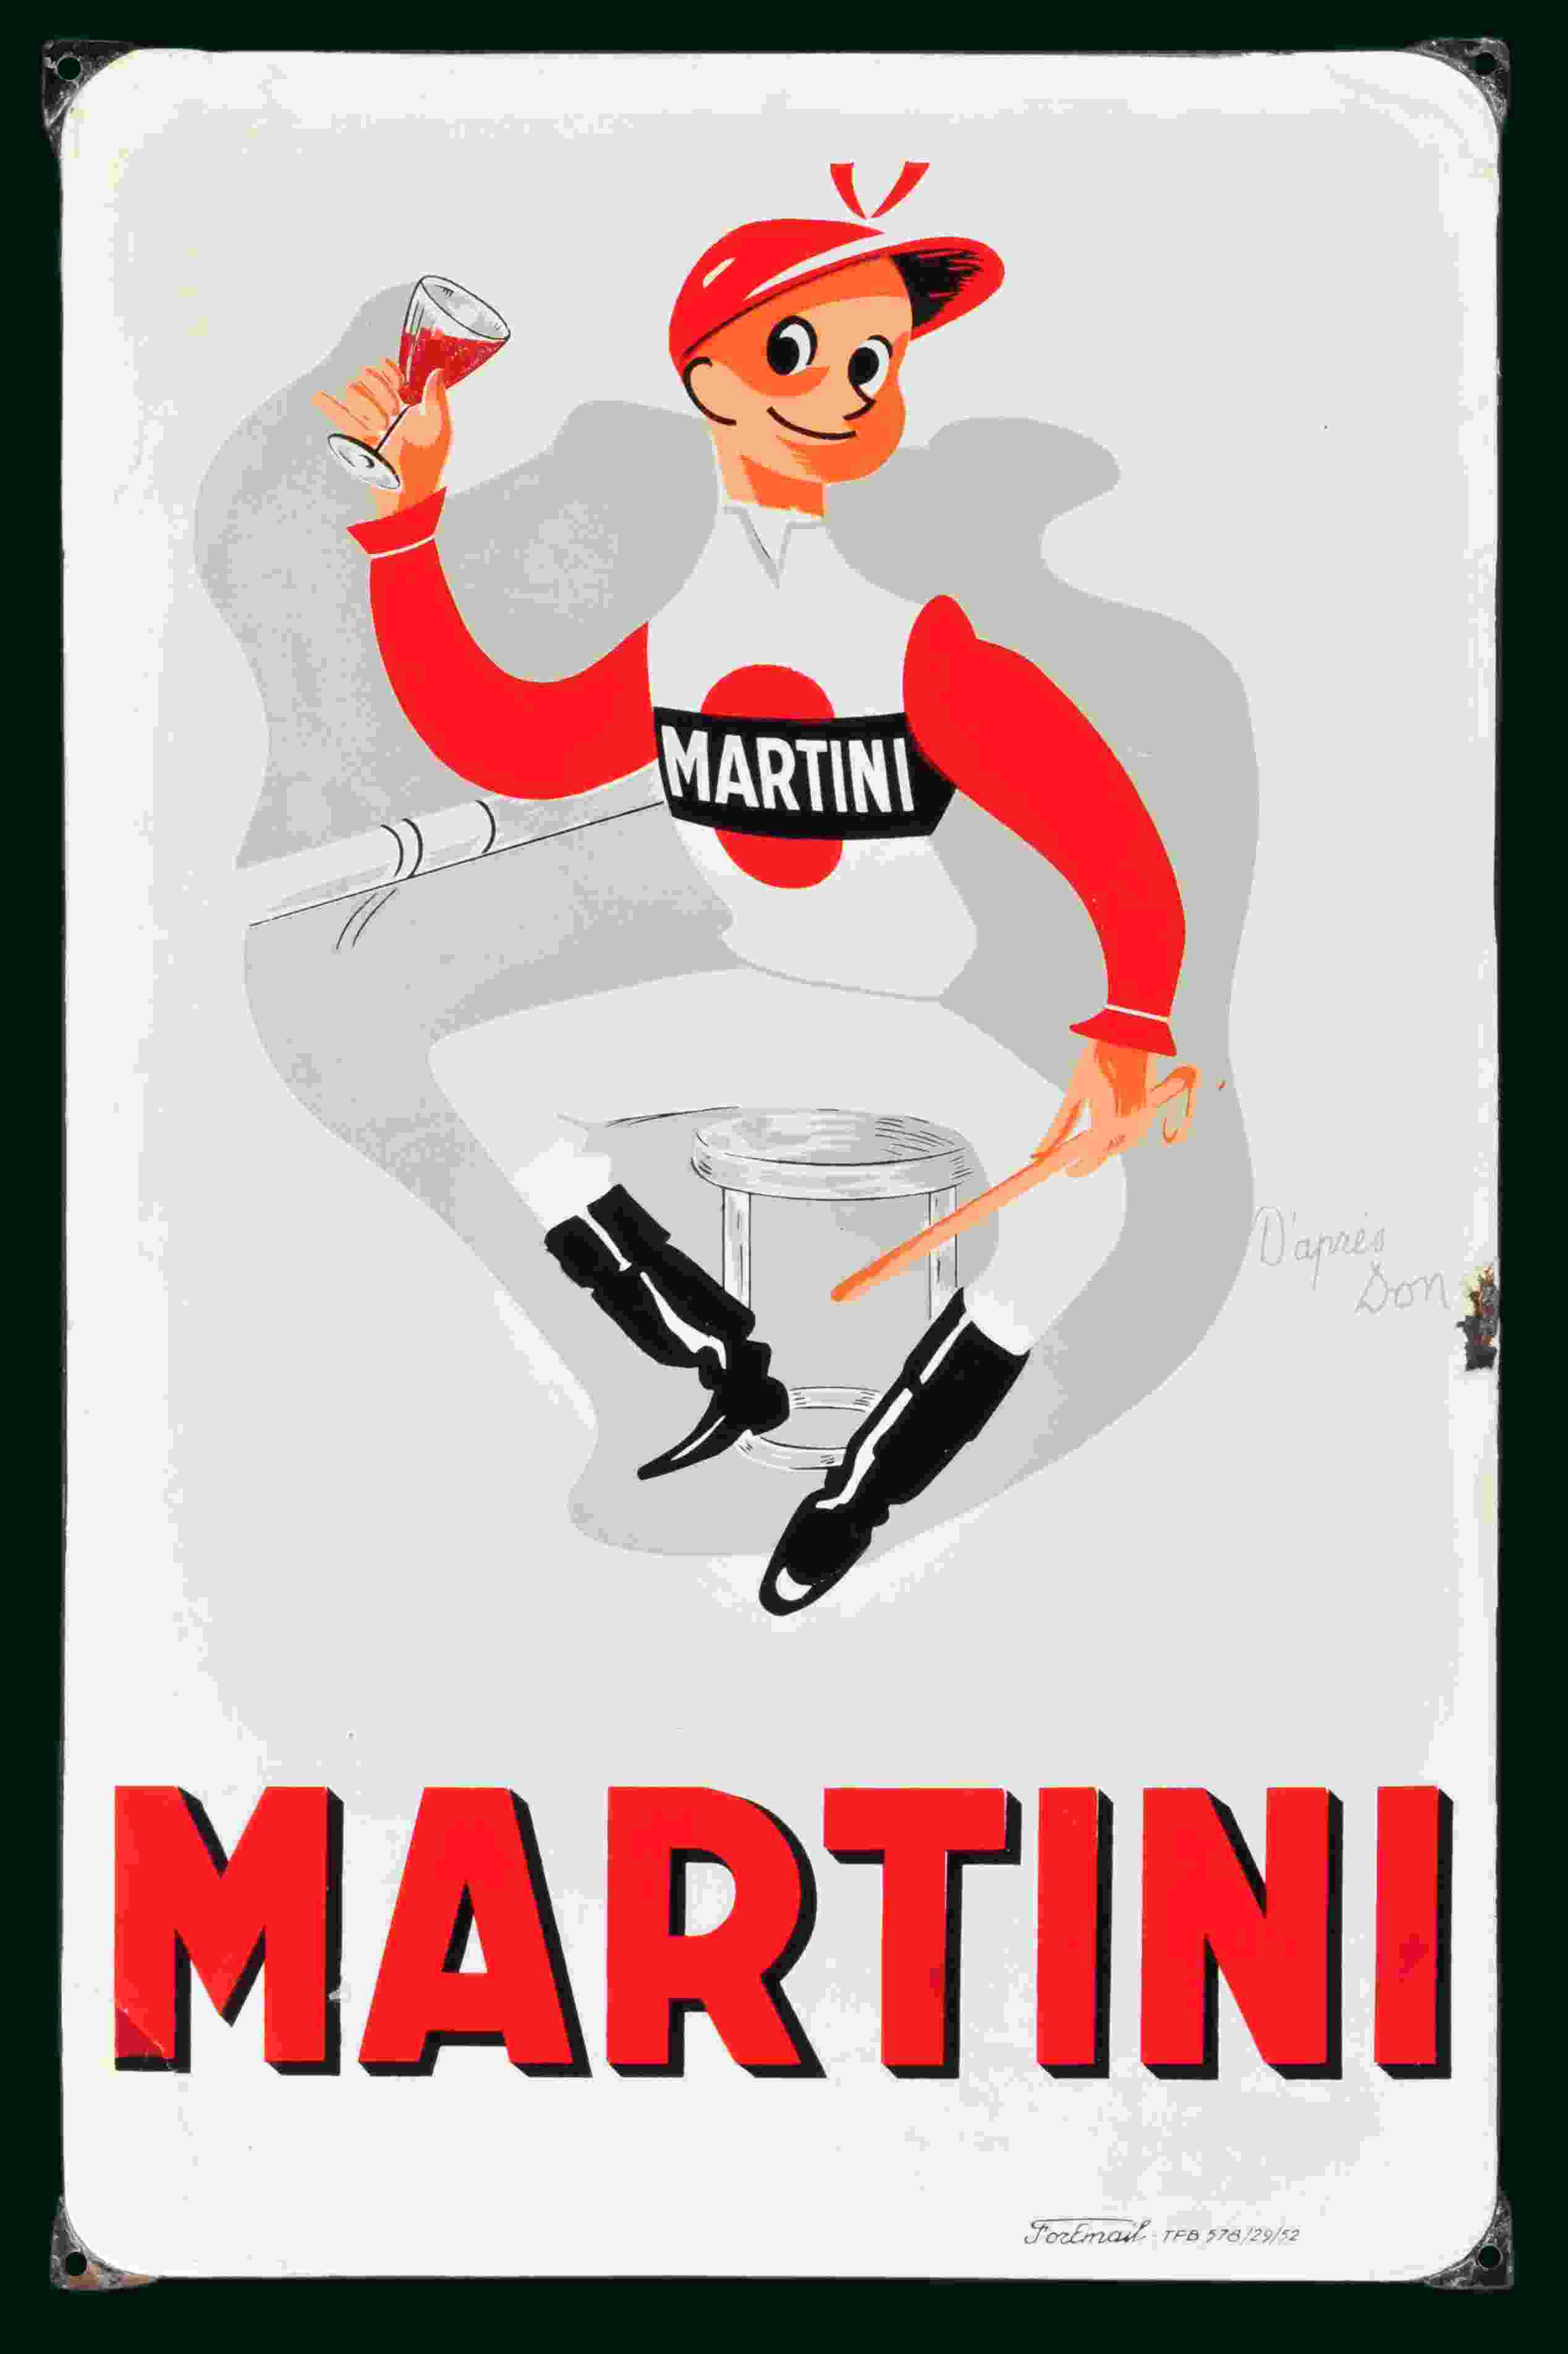 Martini Jockey 